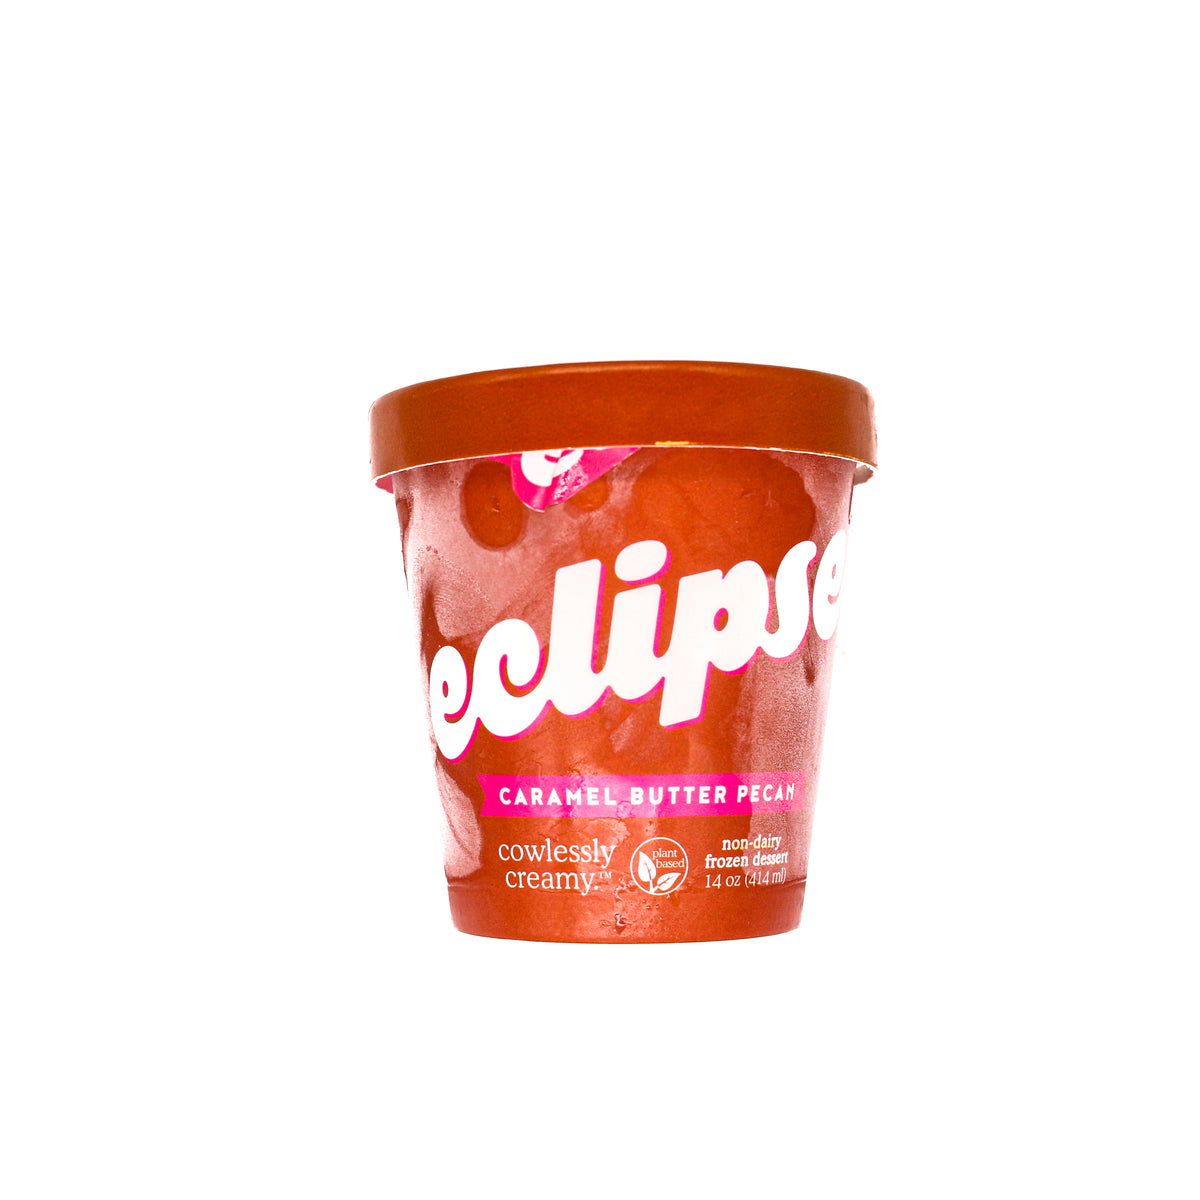 Eclipse Ice Cream Caramel Pecan Butter